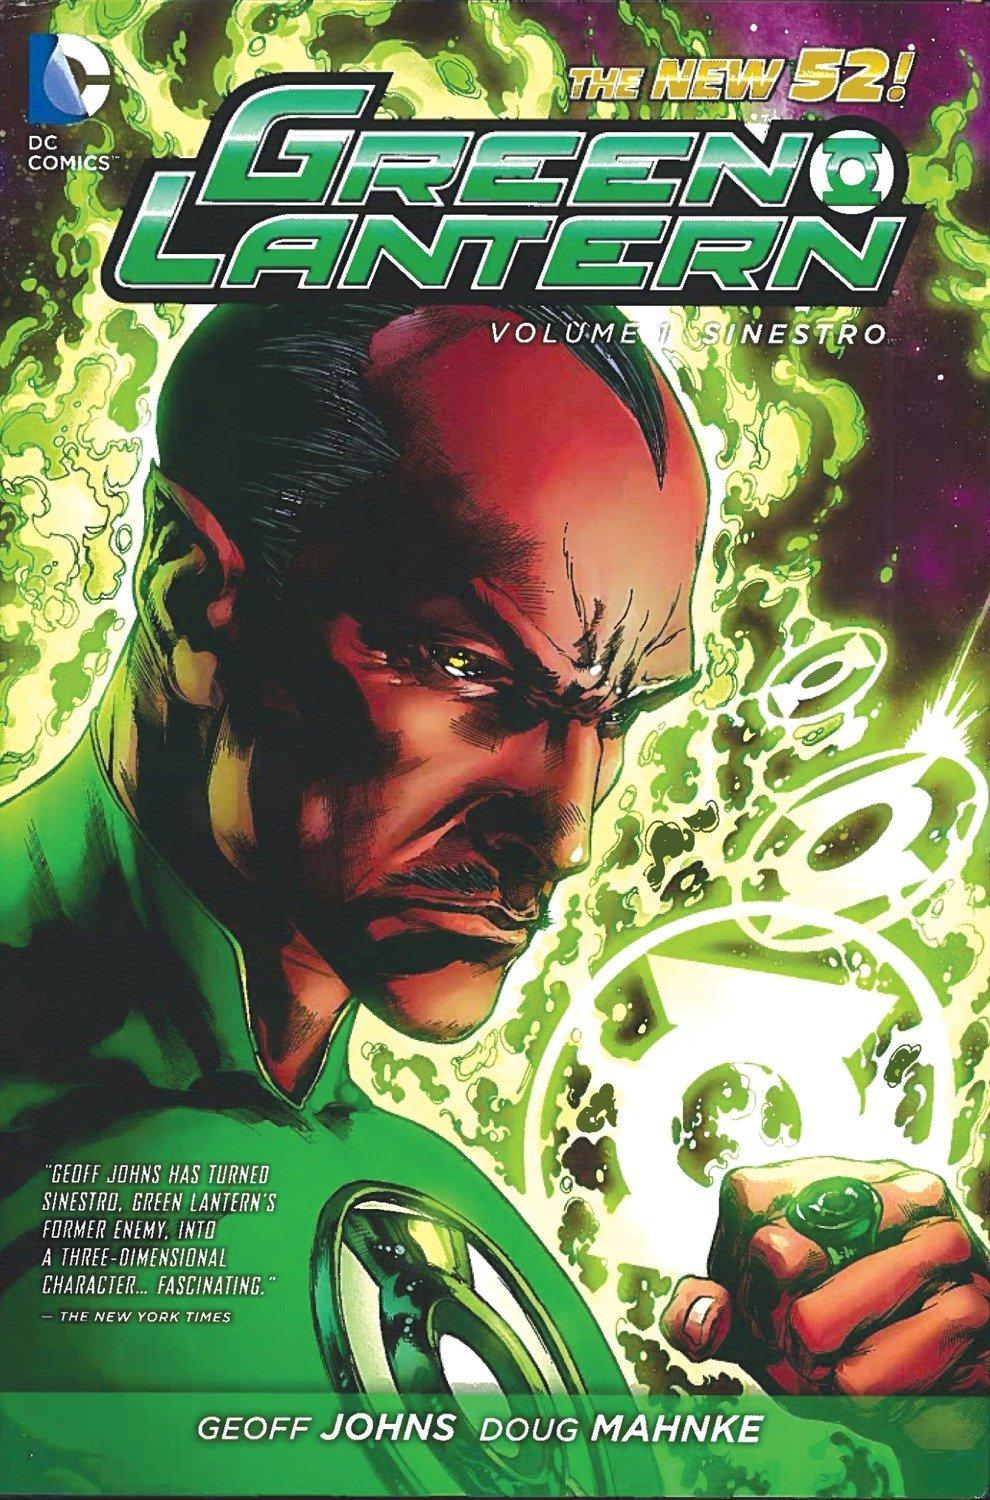 Green Lantern Vol. 1: Sinestro (The New 52): Geoff Johns